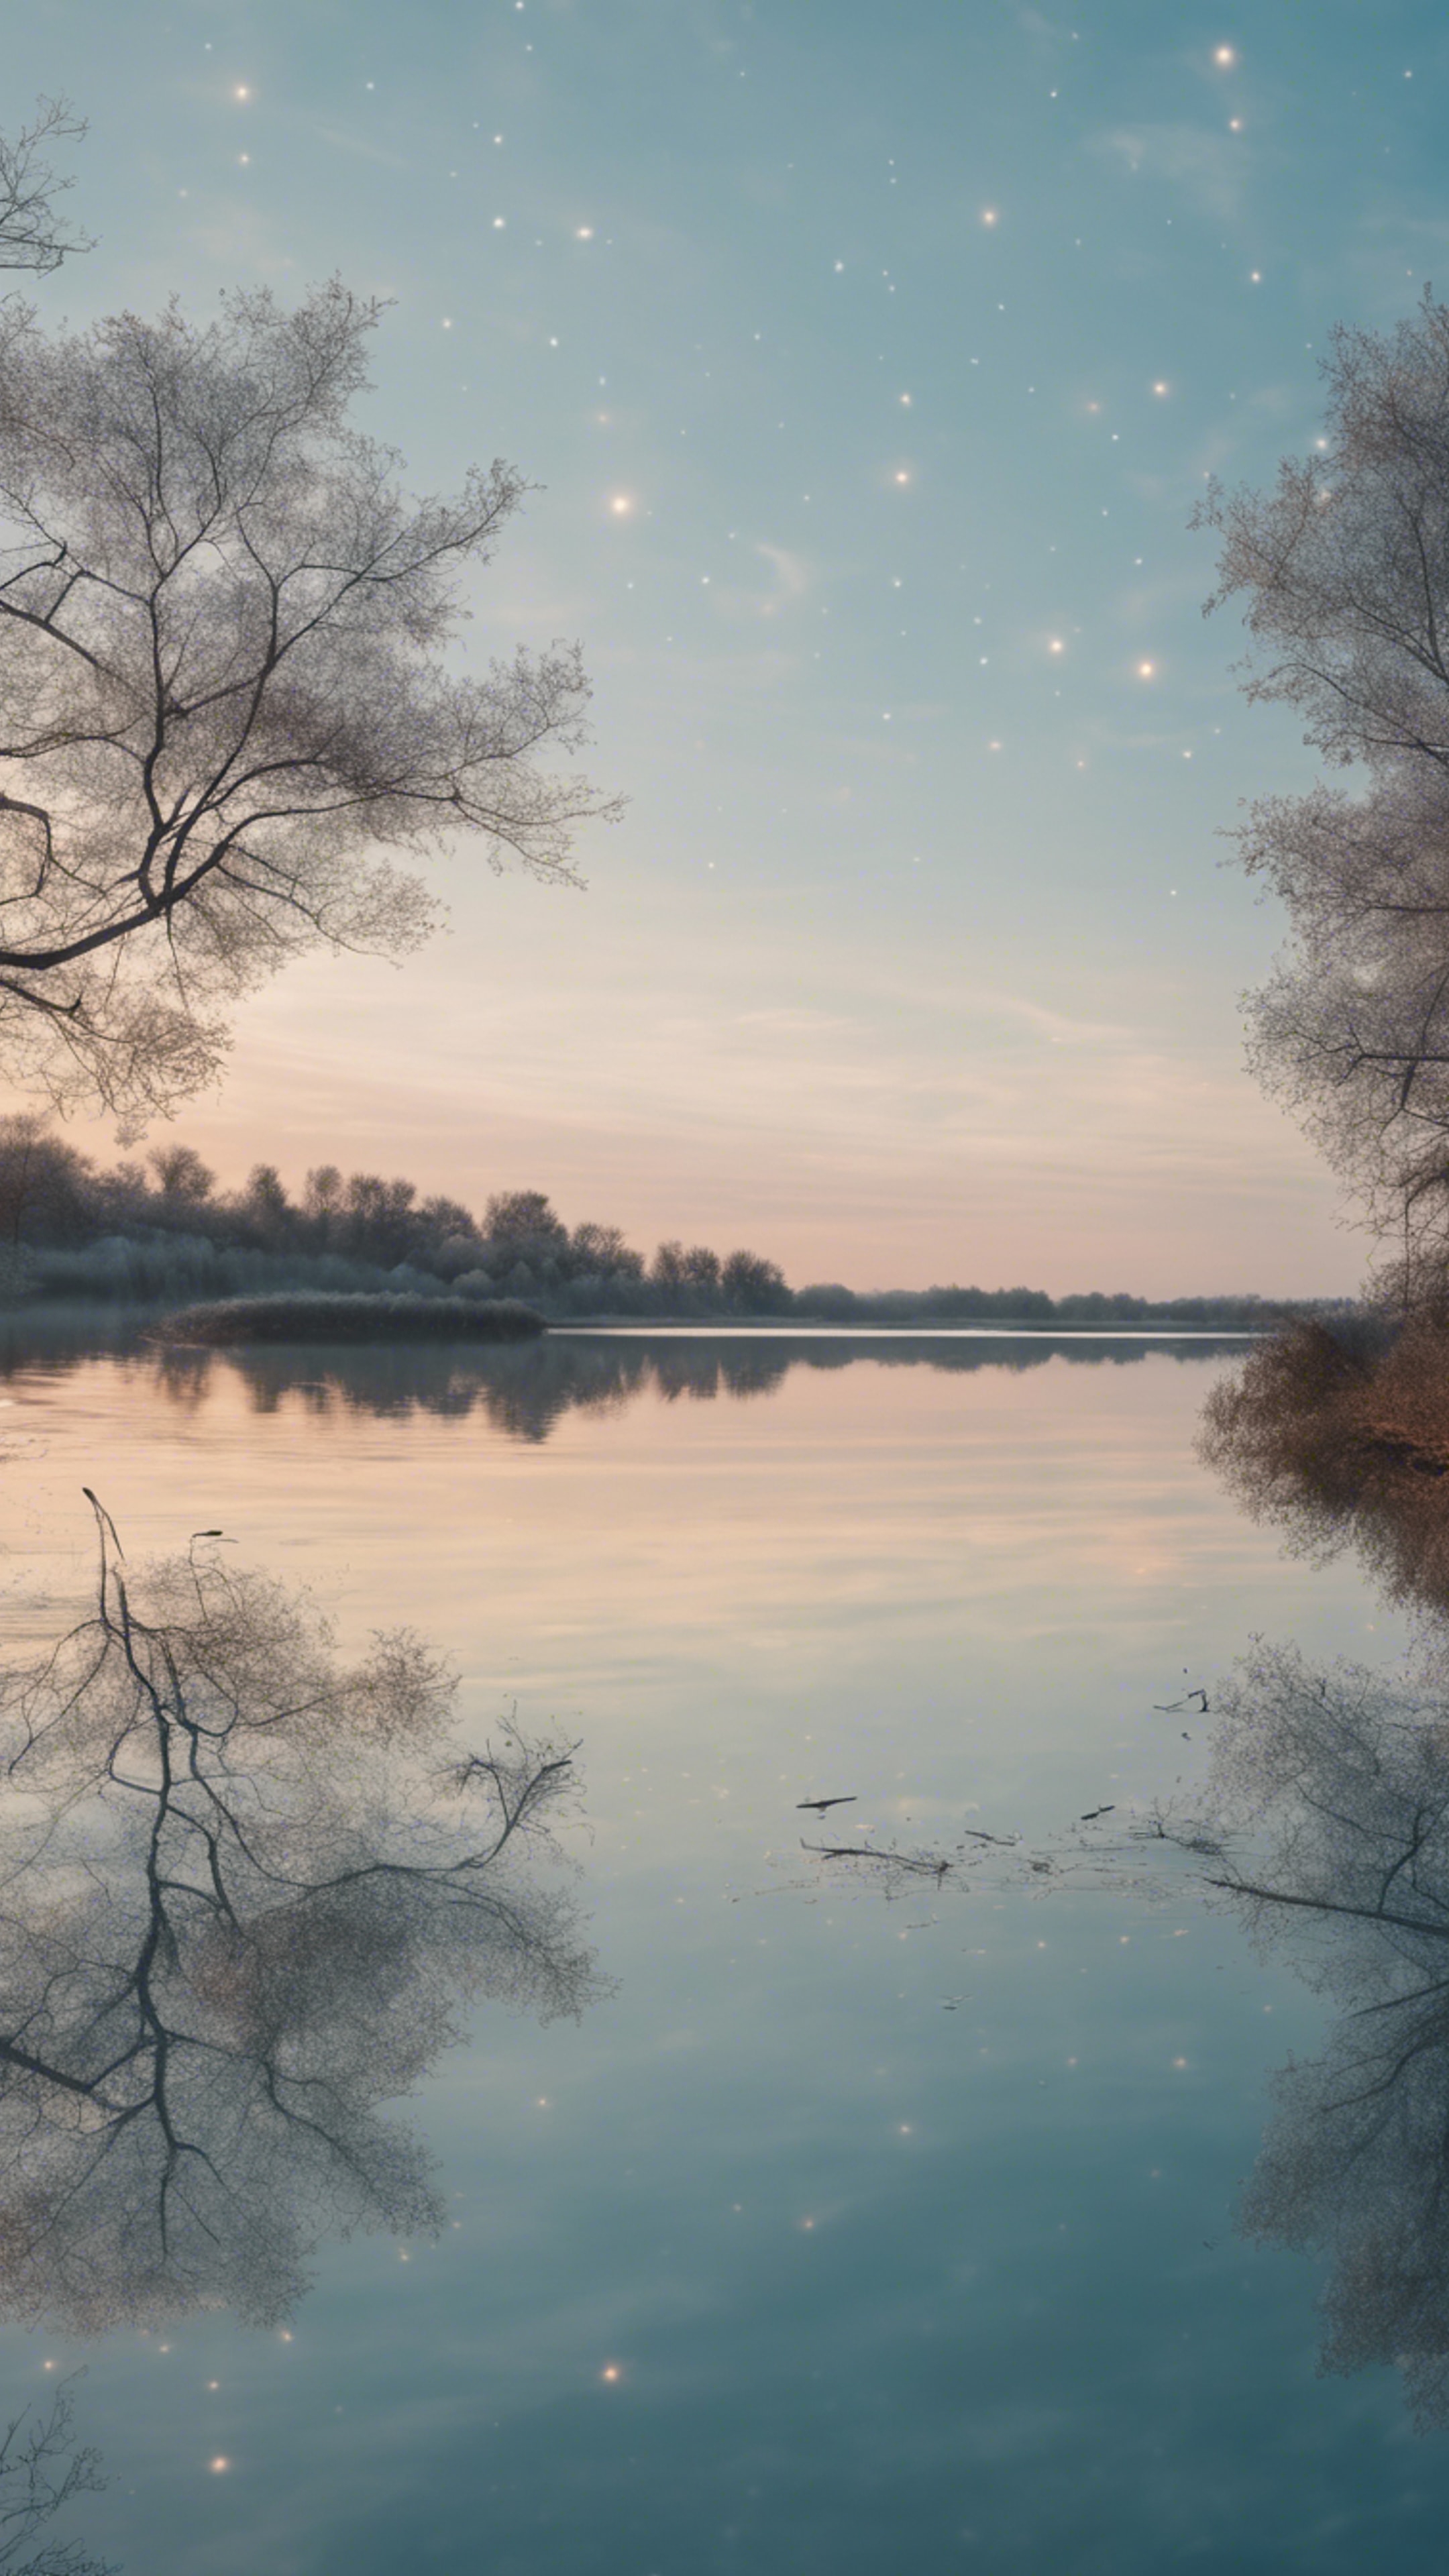 A pastel blue sky at dawn reflecting on a tranquil lake. Wallpaper[f0afb54b812141669b7c]